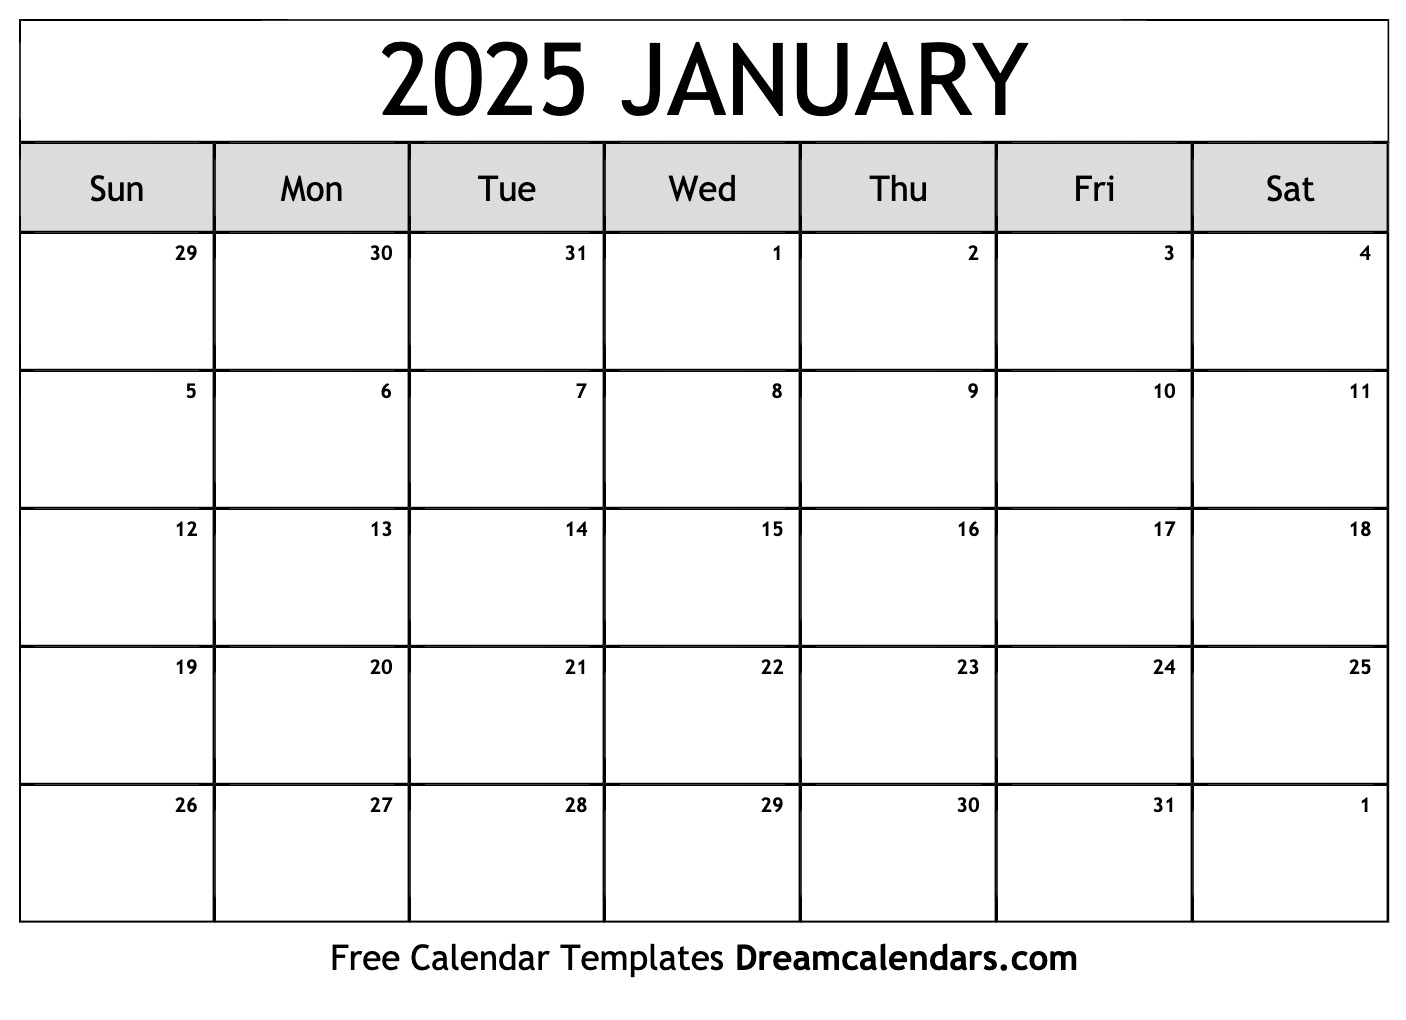 January 2025 Calendar Time And Date Free - berrie deedee